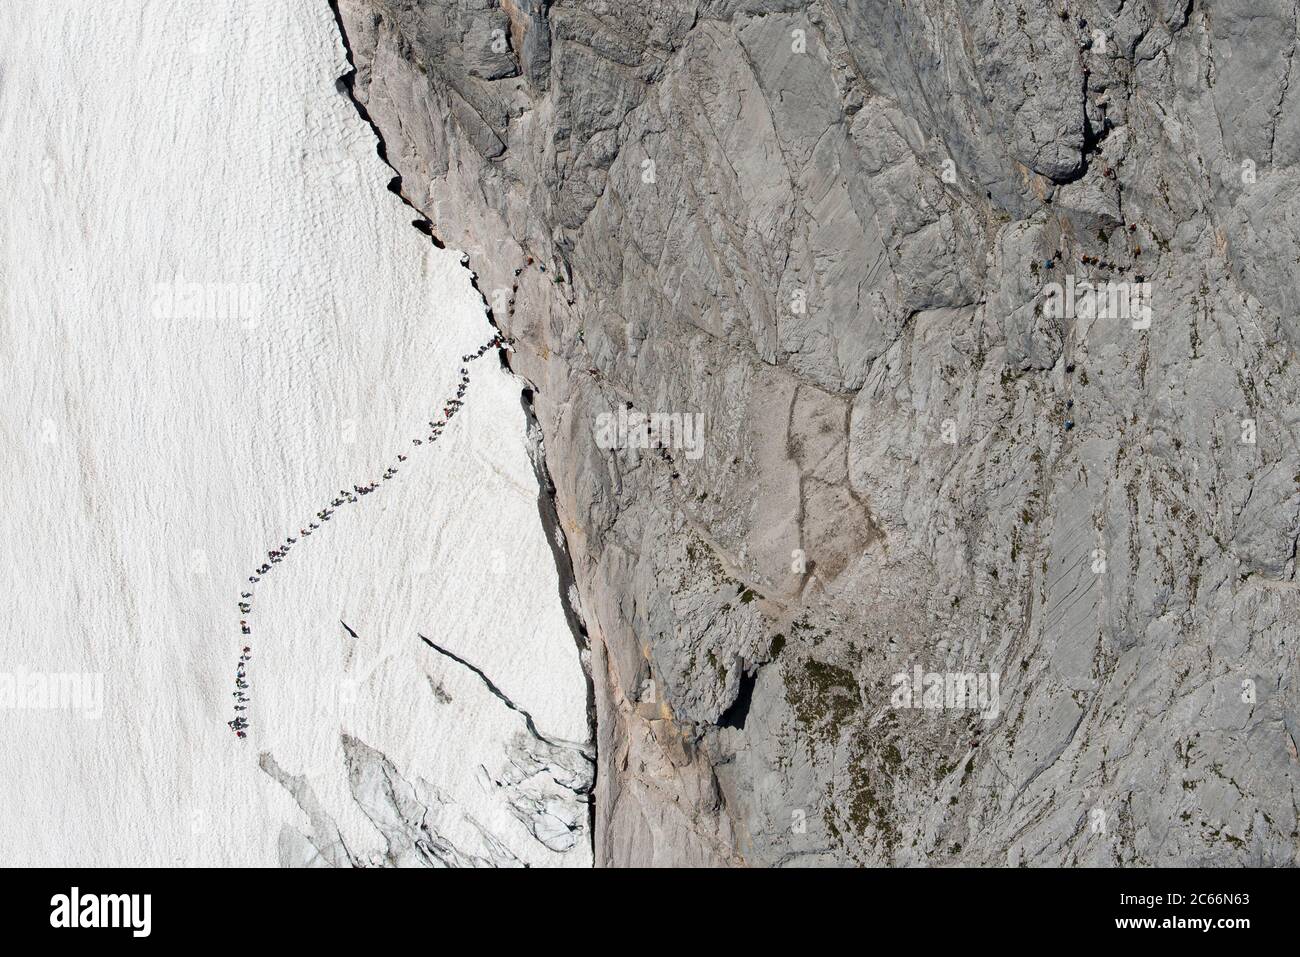 Mountaineers queuing up on Höllentalferner Glacier, aerial photograph, Wetterstein Mountain Range, Bavaria, Germany Stock Photo